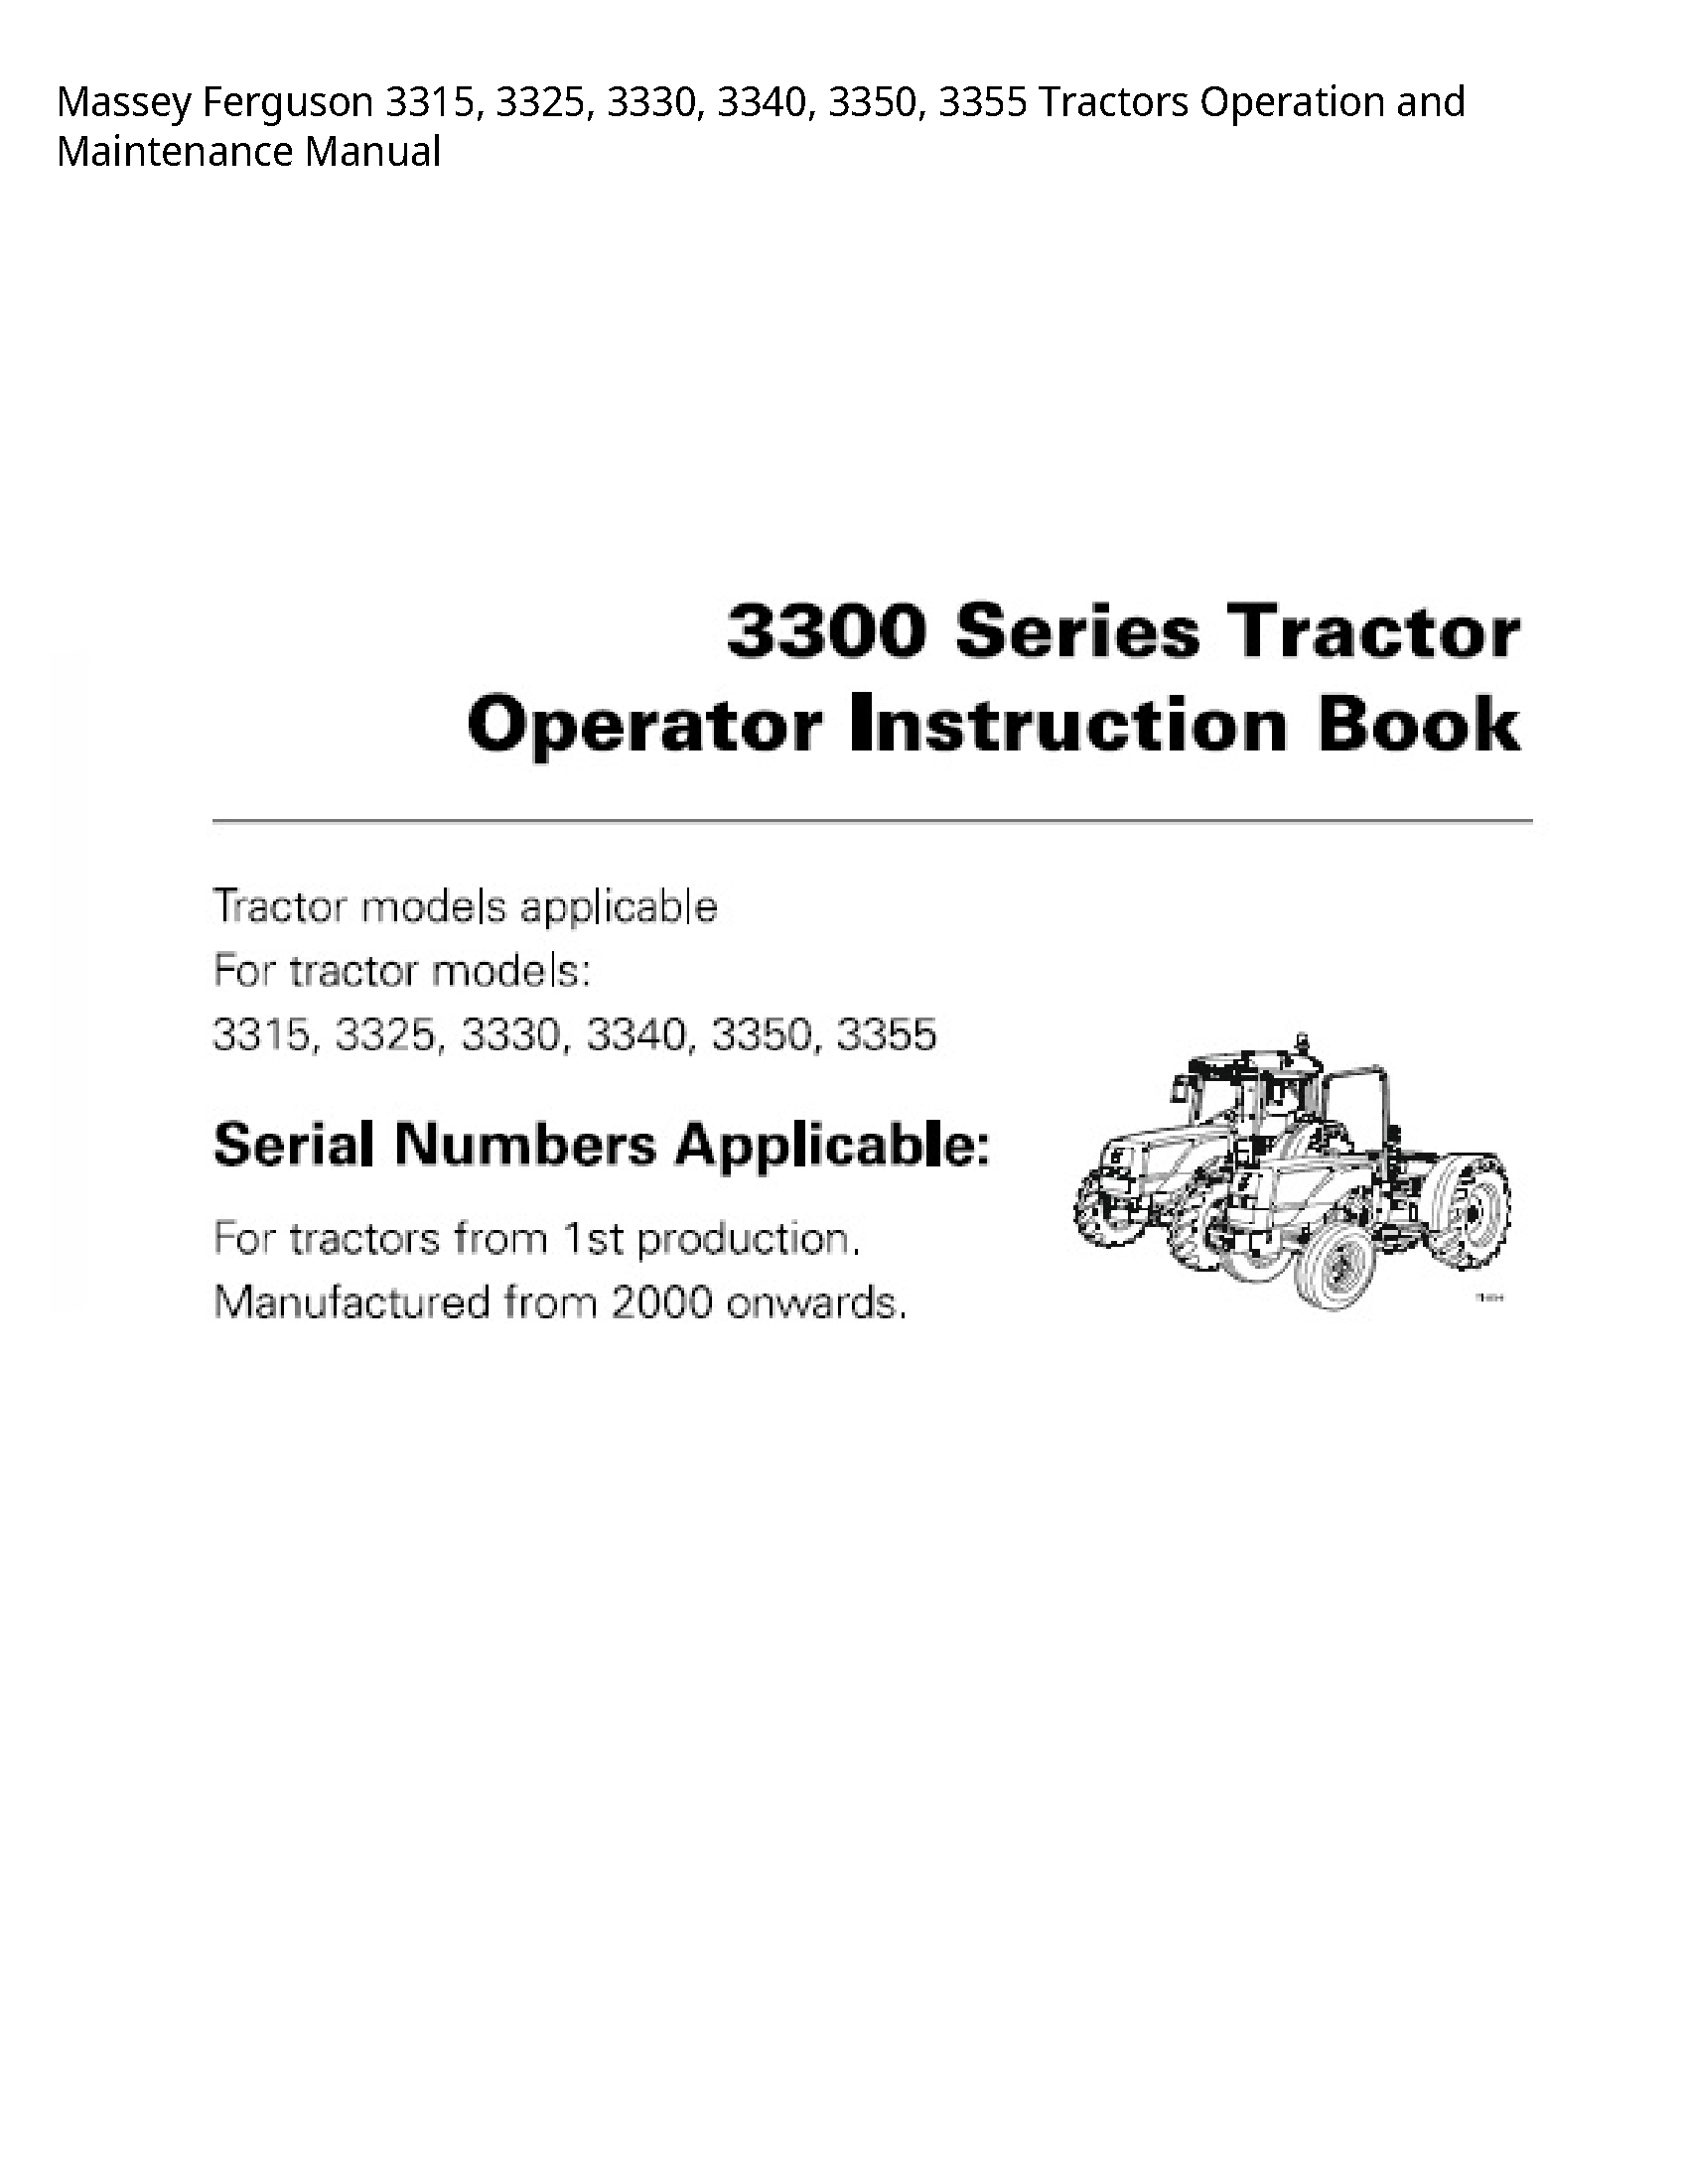 Massey Ferguson 3315 Tractors Operation  Maintenance manual